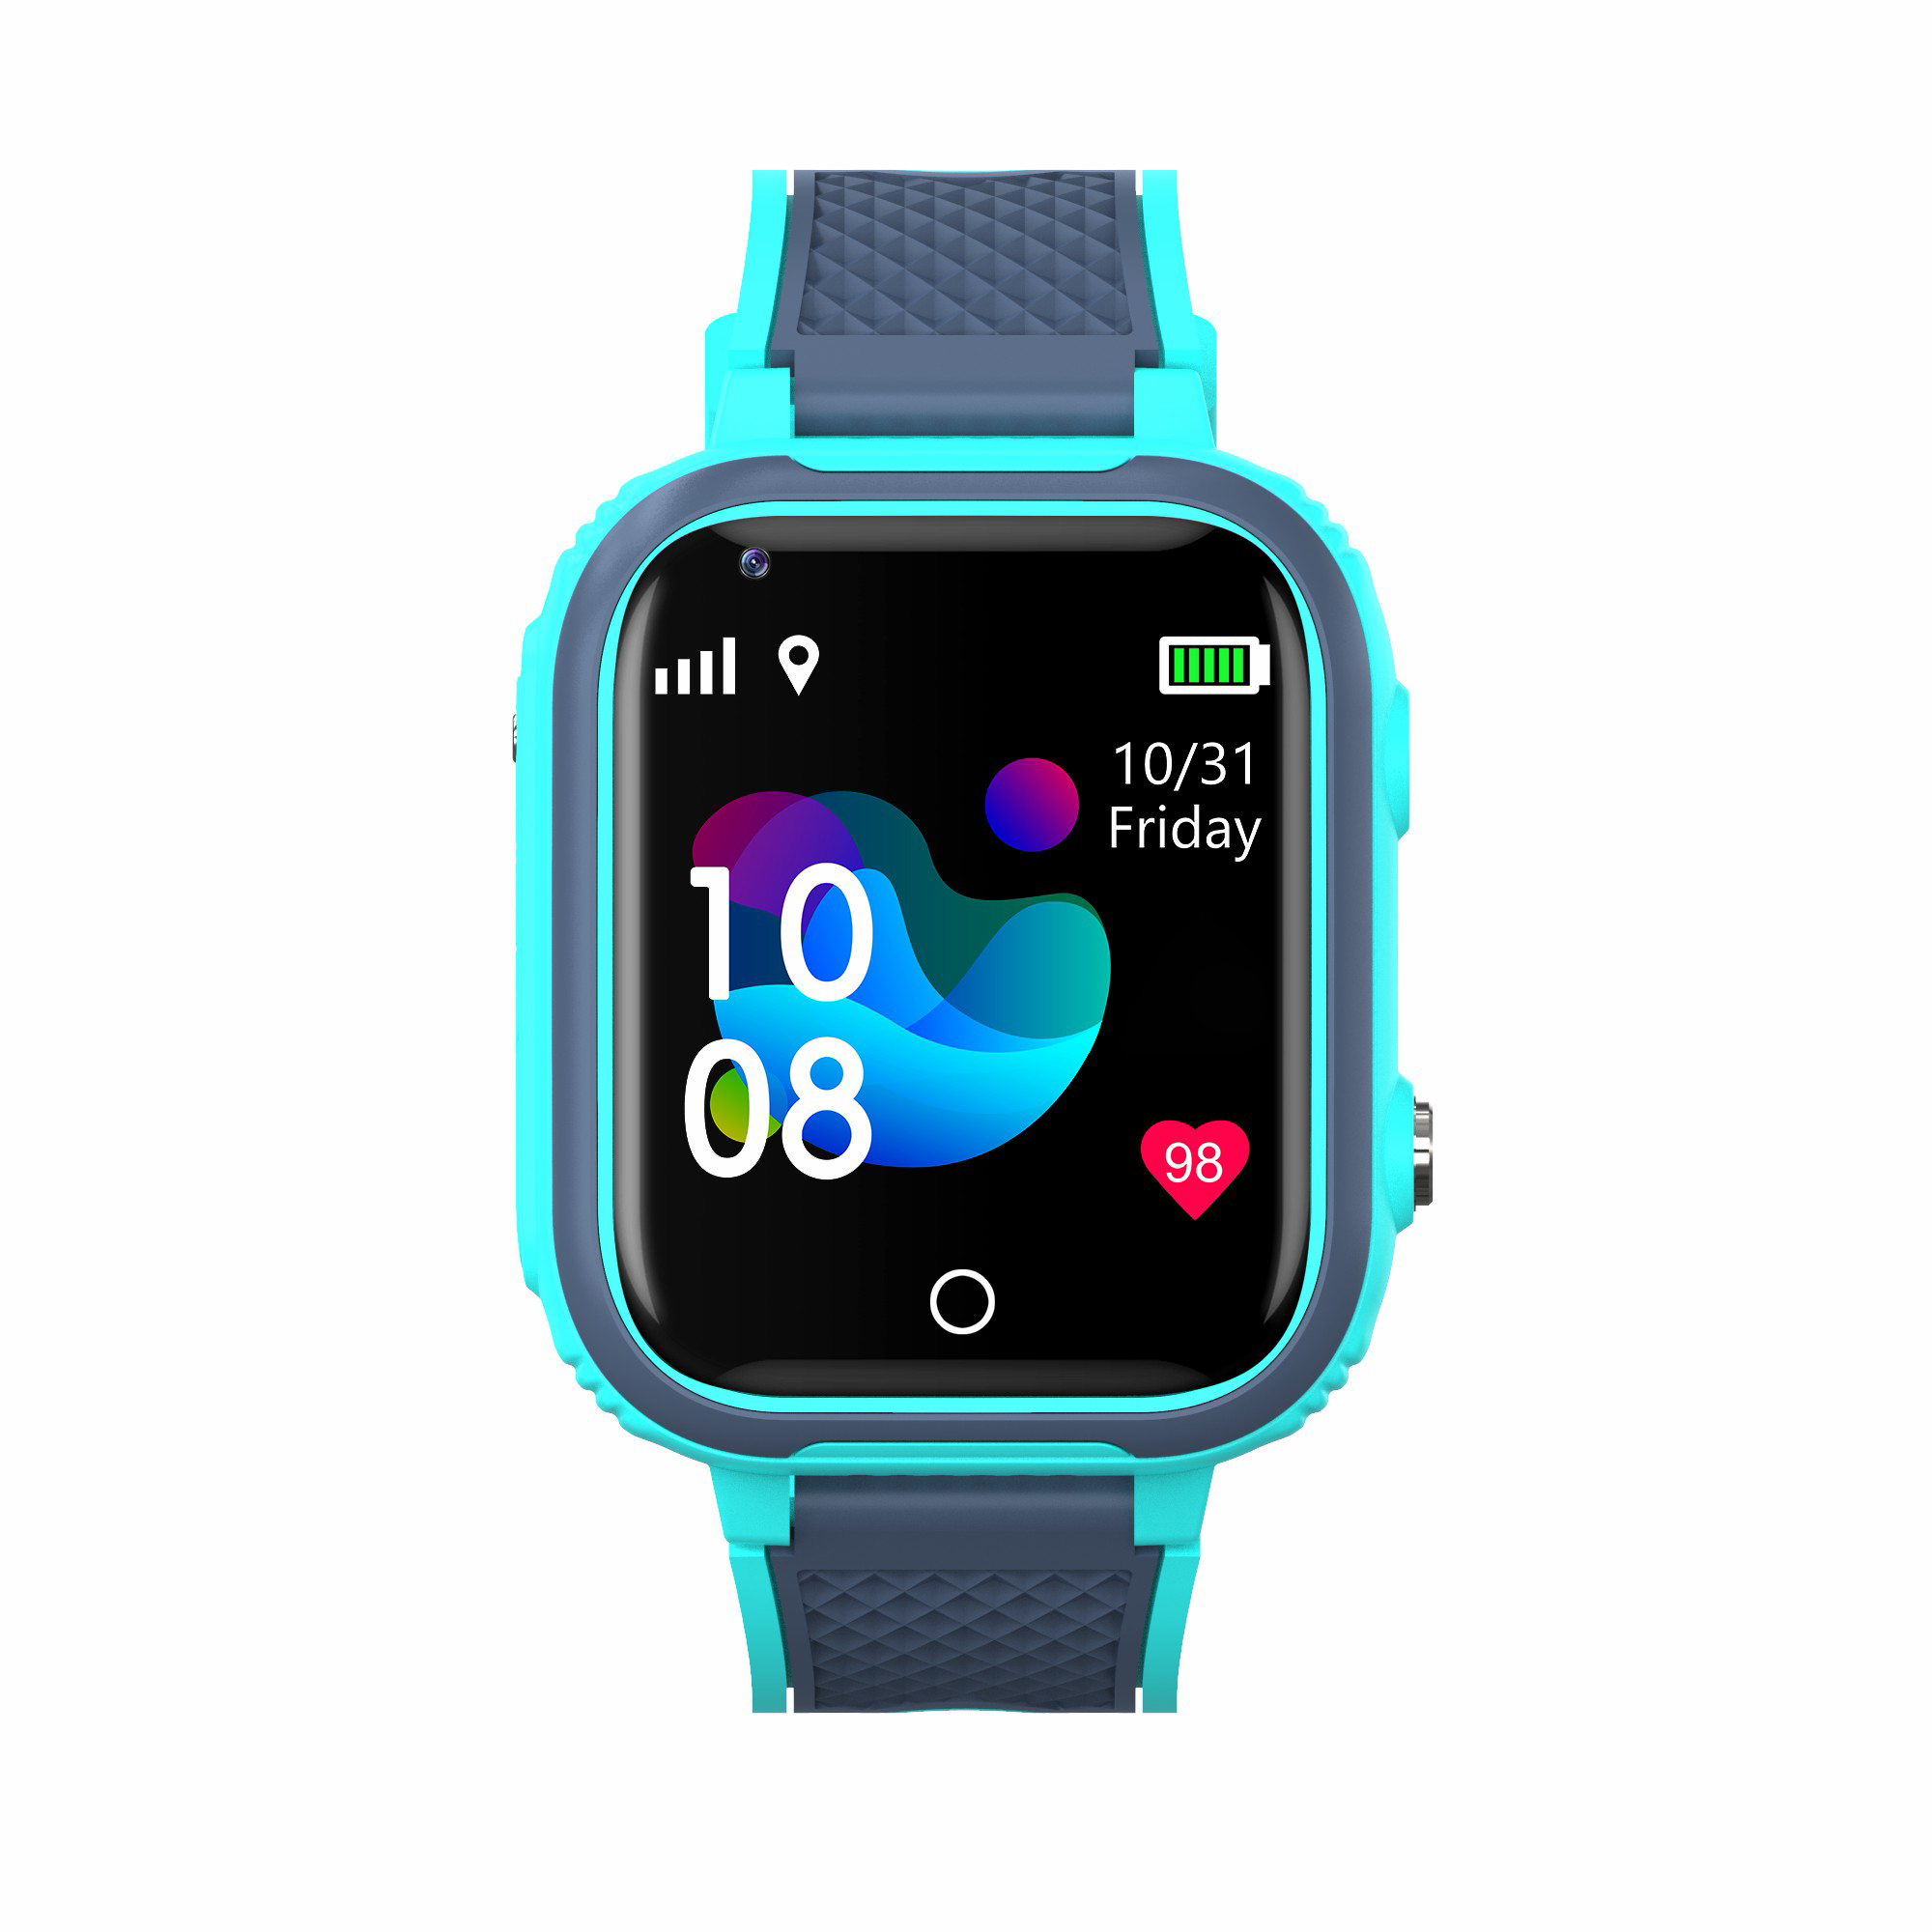 4G IP67 Waterproof Safety SOS Emergency Help Smart Watch GPS Tracker